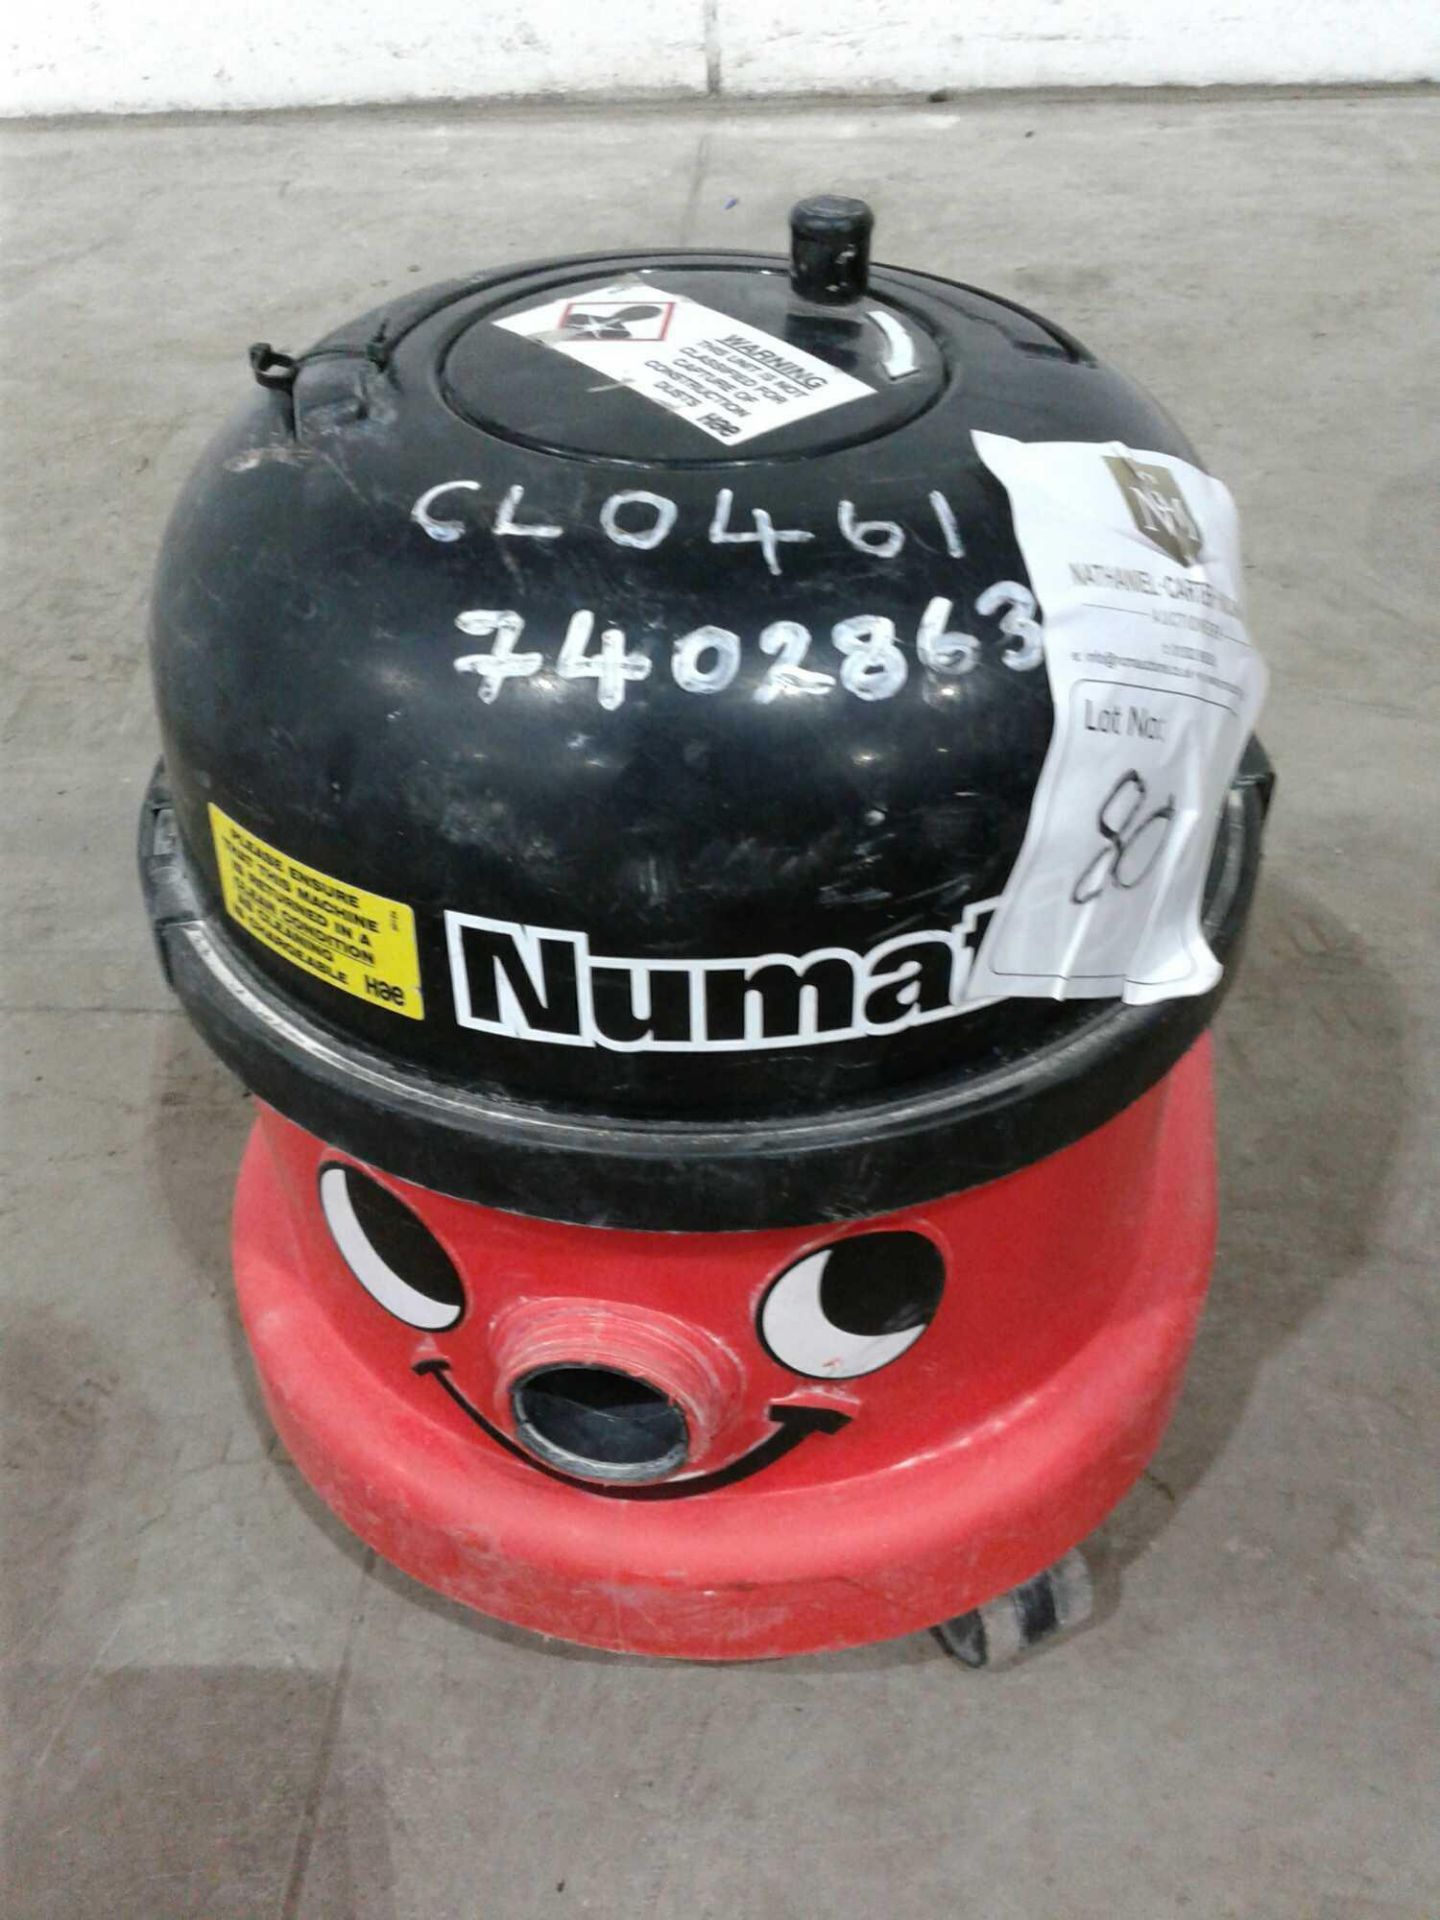 Henry Numatic vacuum cleaner